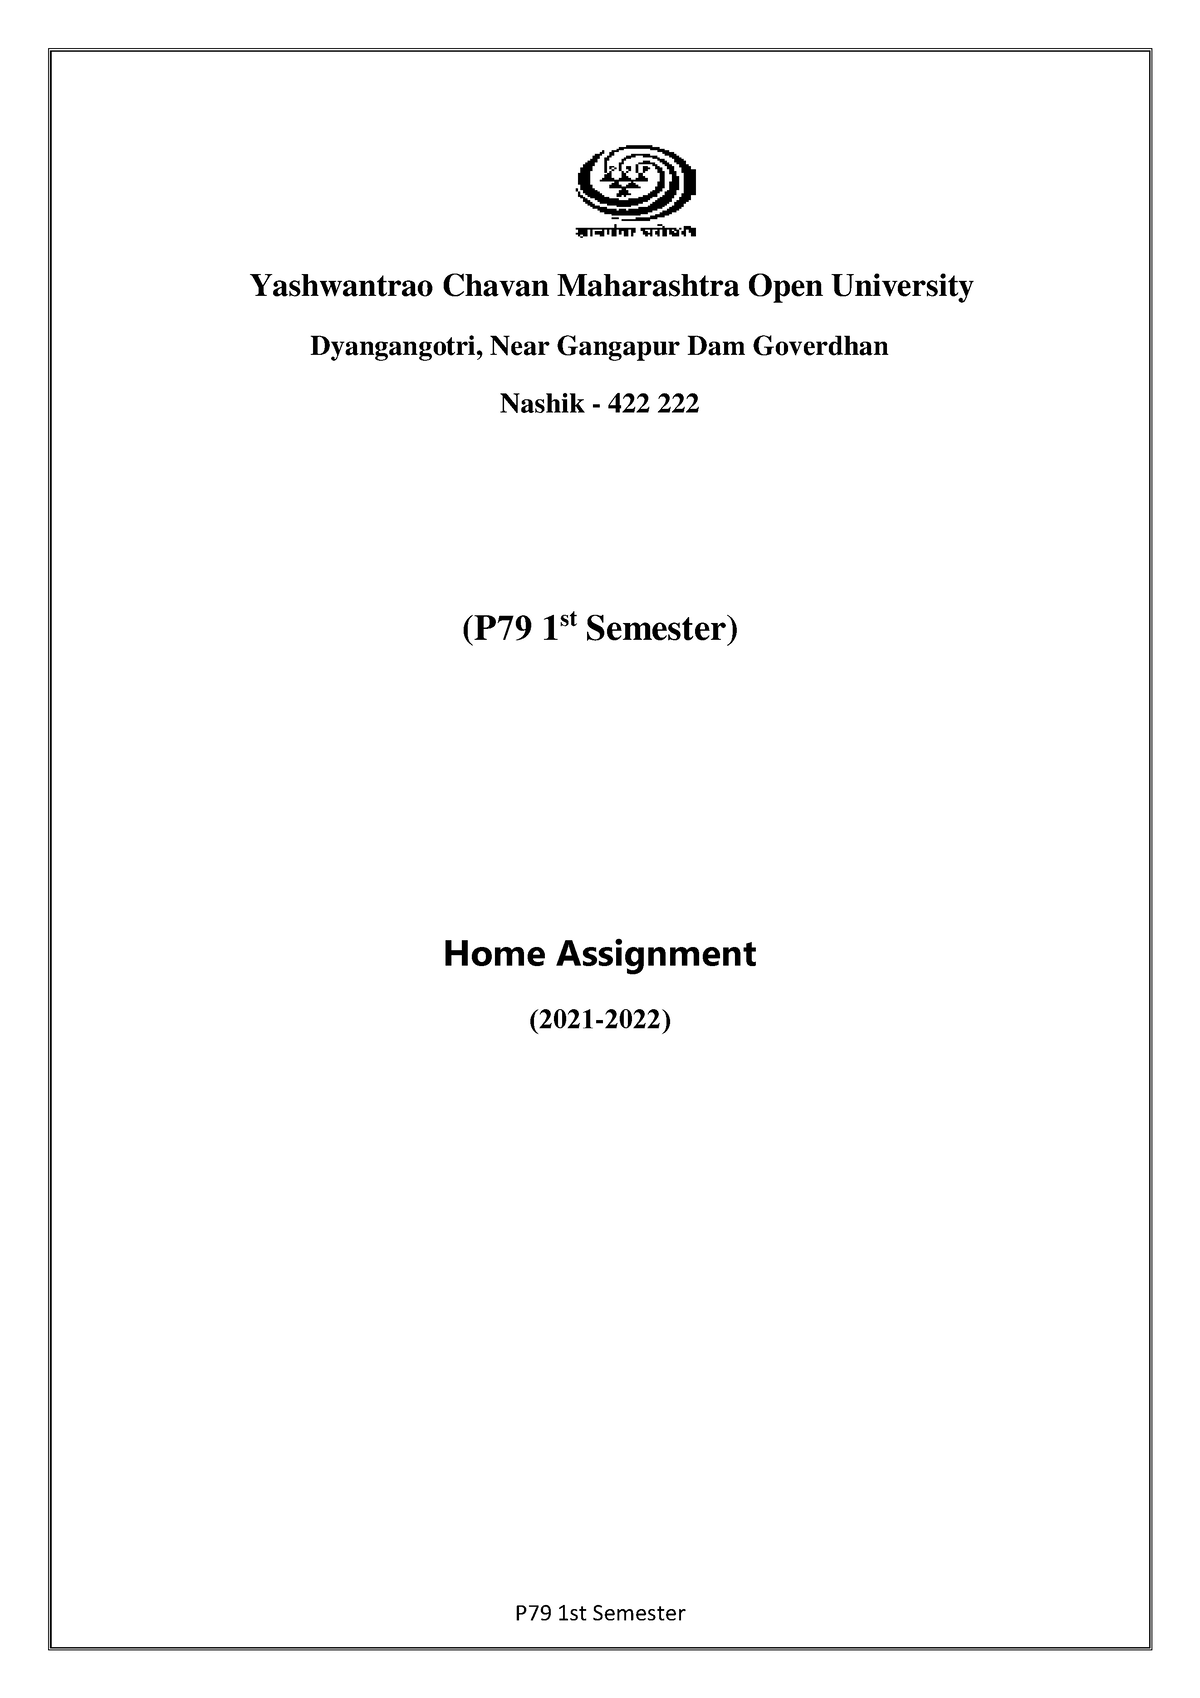 yashwantrao chavan maharashtra open university home assignments